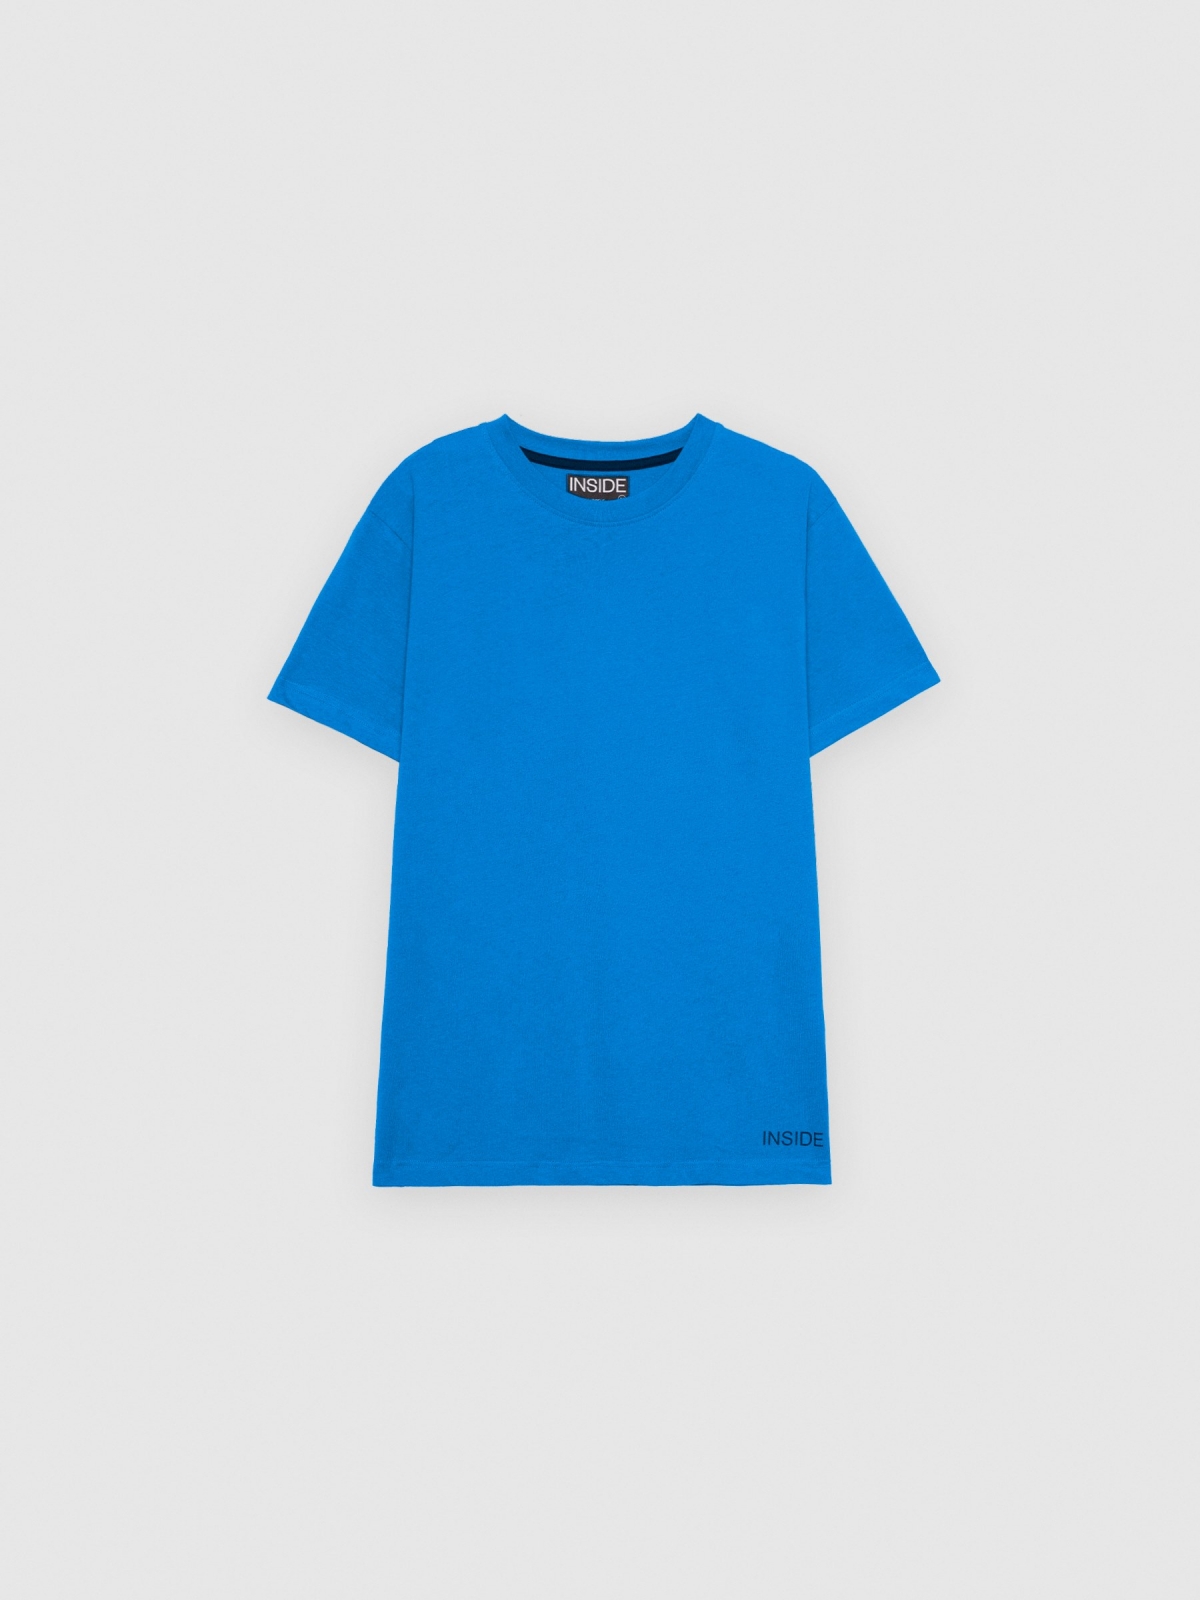  Basic short sleeve t-shirt ducat blue